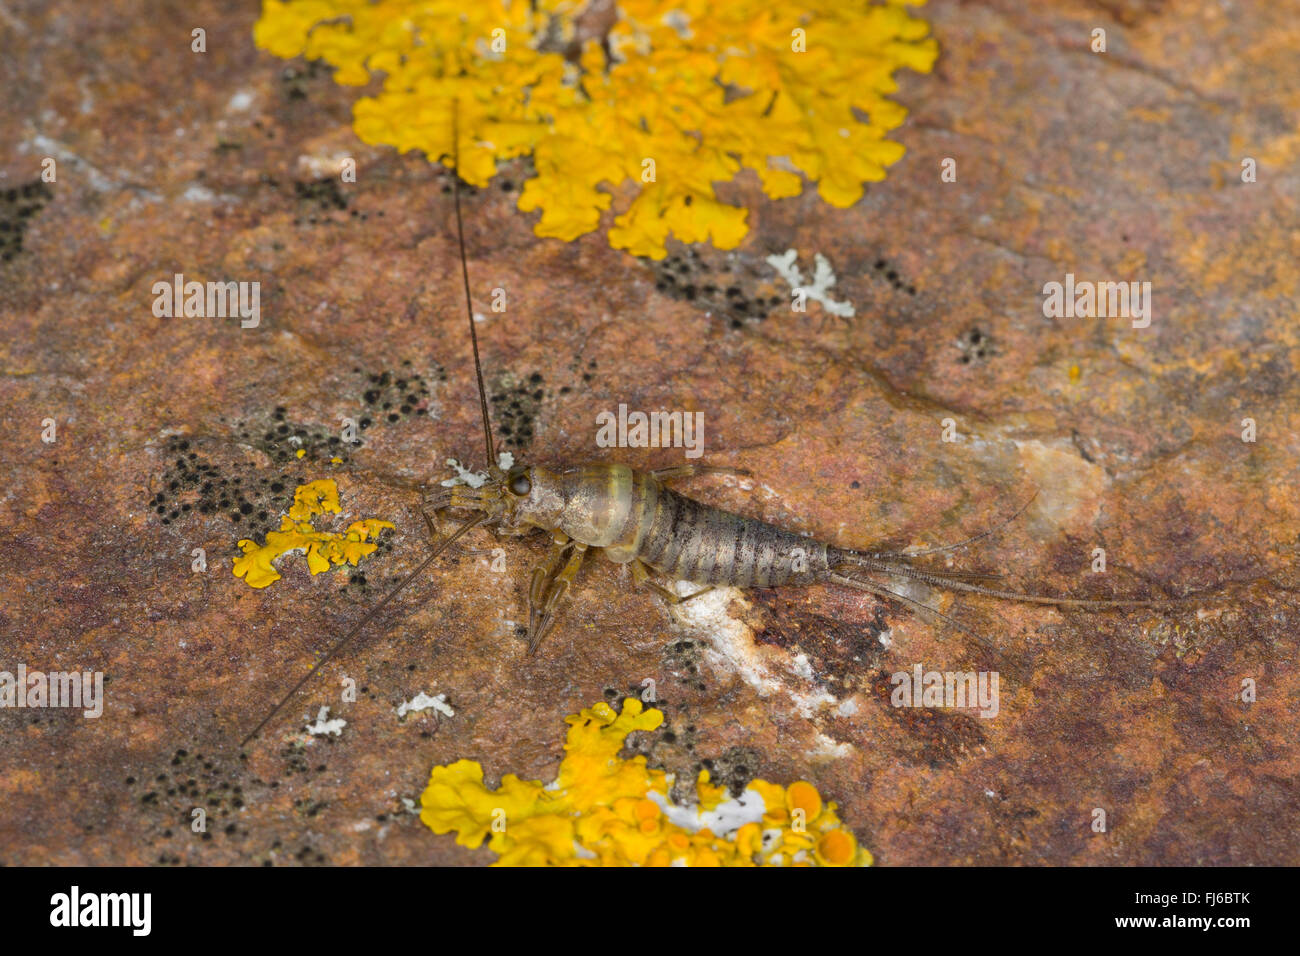 Jumping bristletails (Petrobius brevistylis, Petrobius brevistylus), sittin on a rock, Germany Stock Photo